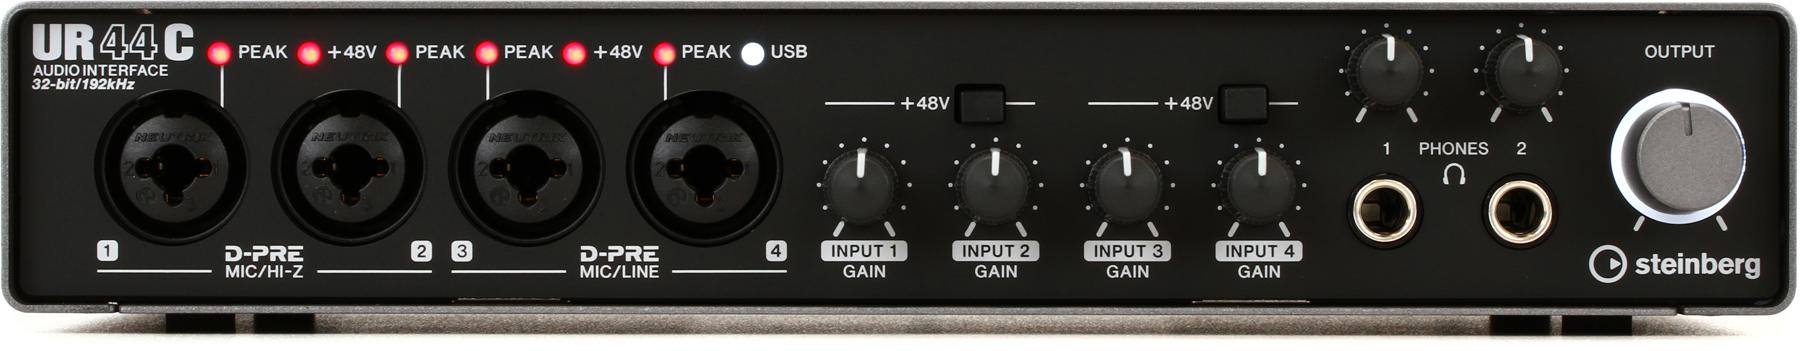 Steinberg UR44C USB Audio Interface main image